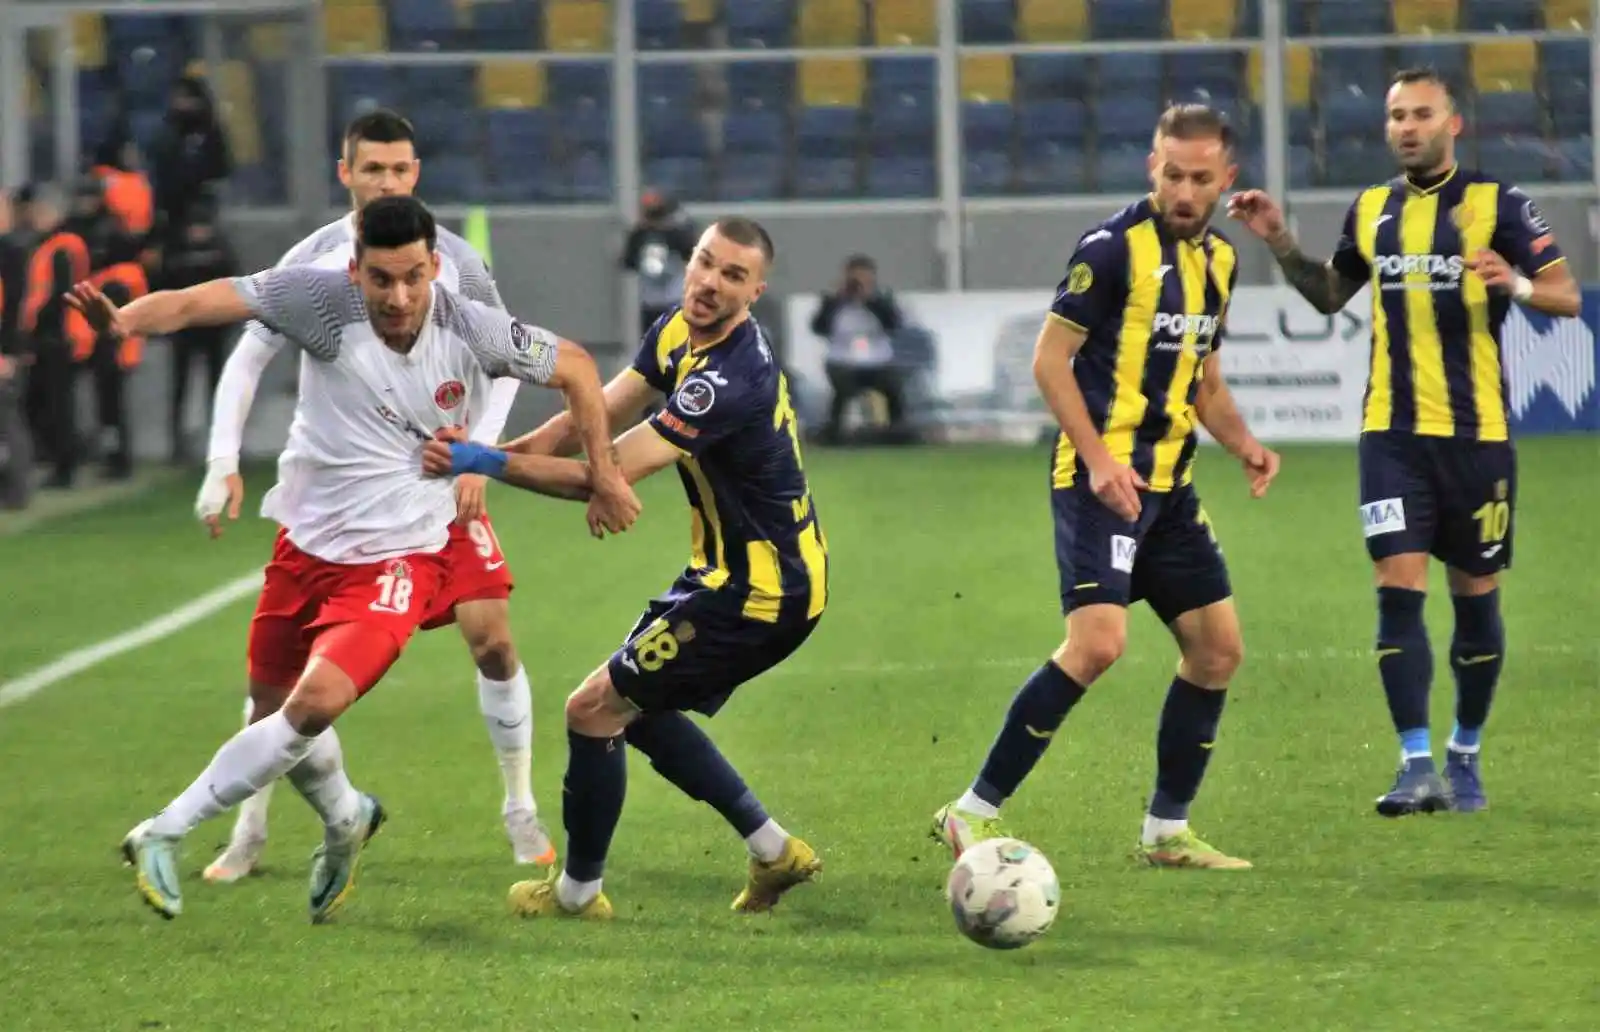 Spor Toto Süper Lig: Ankaragücü: 1 - Ümraniyespor : 2 (Maç sonucu)
